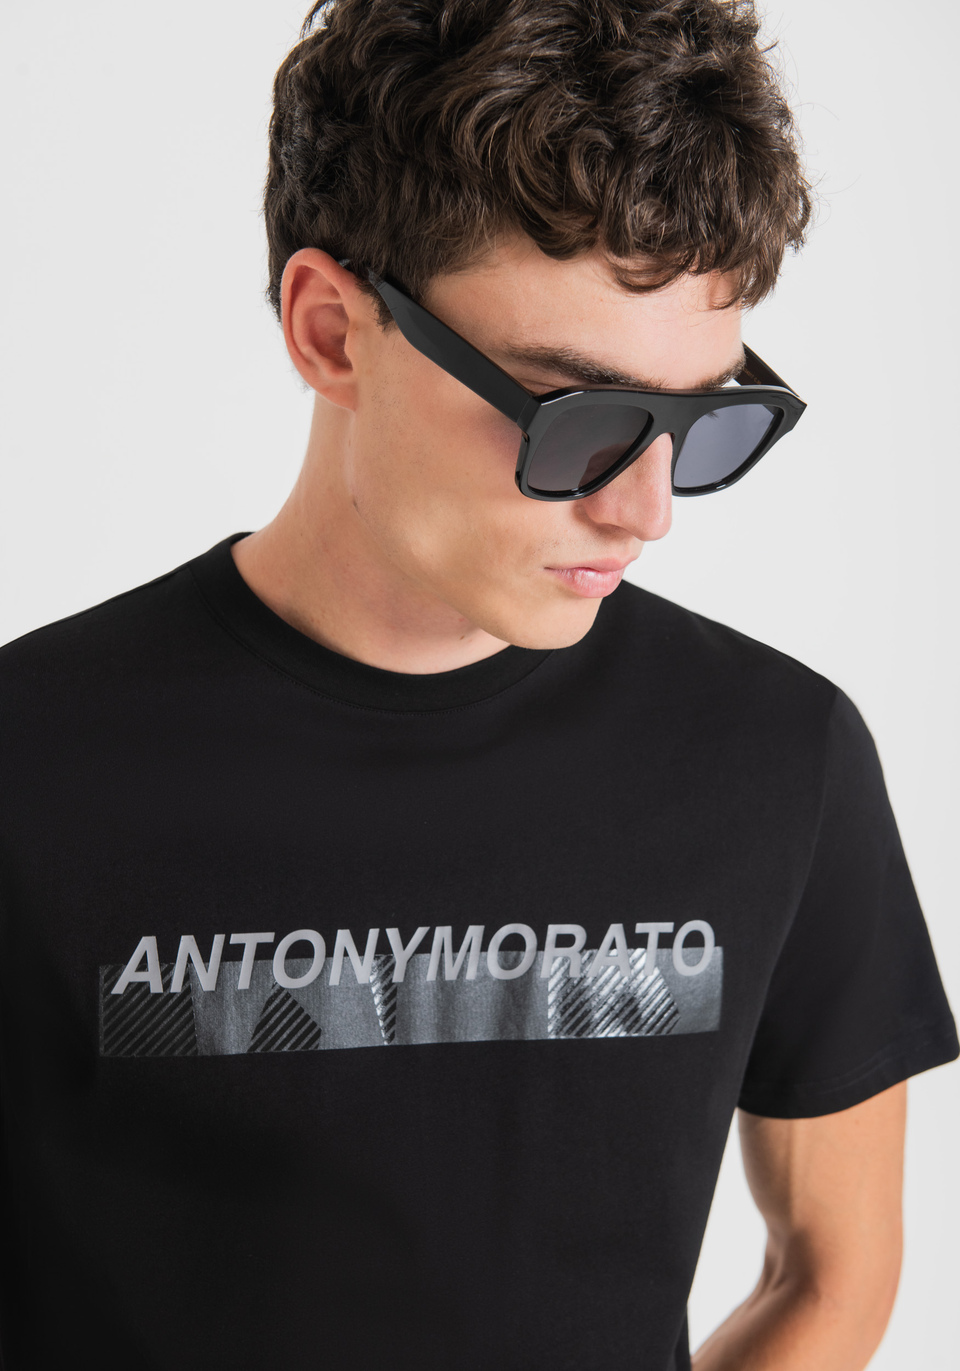 T-SHIRT SLIM FIT AUS 100 % BAUMWOLLE MIT LOGO-PRINT IN GUMMI-OPTIK - Antony Morato Online Shop